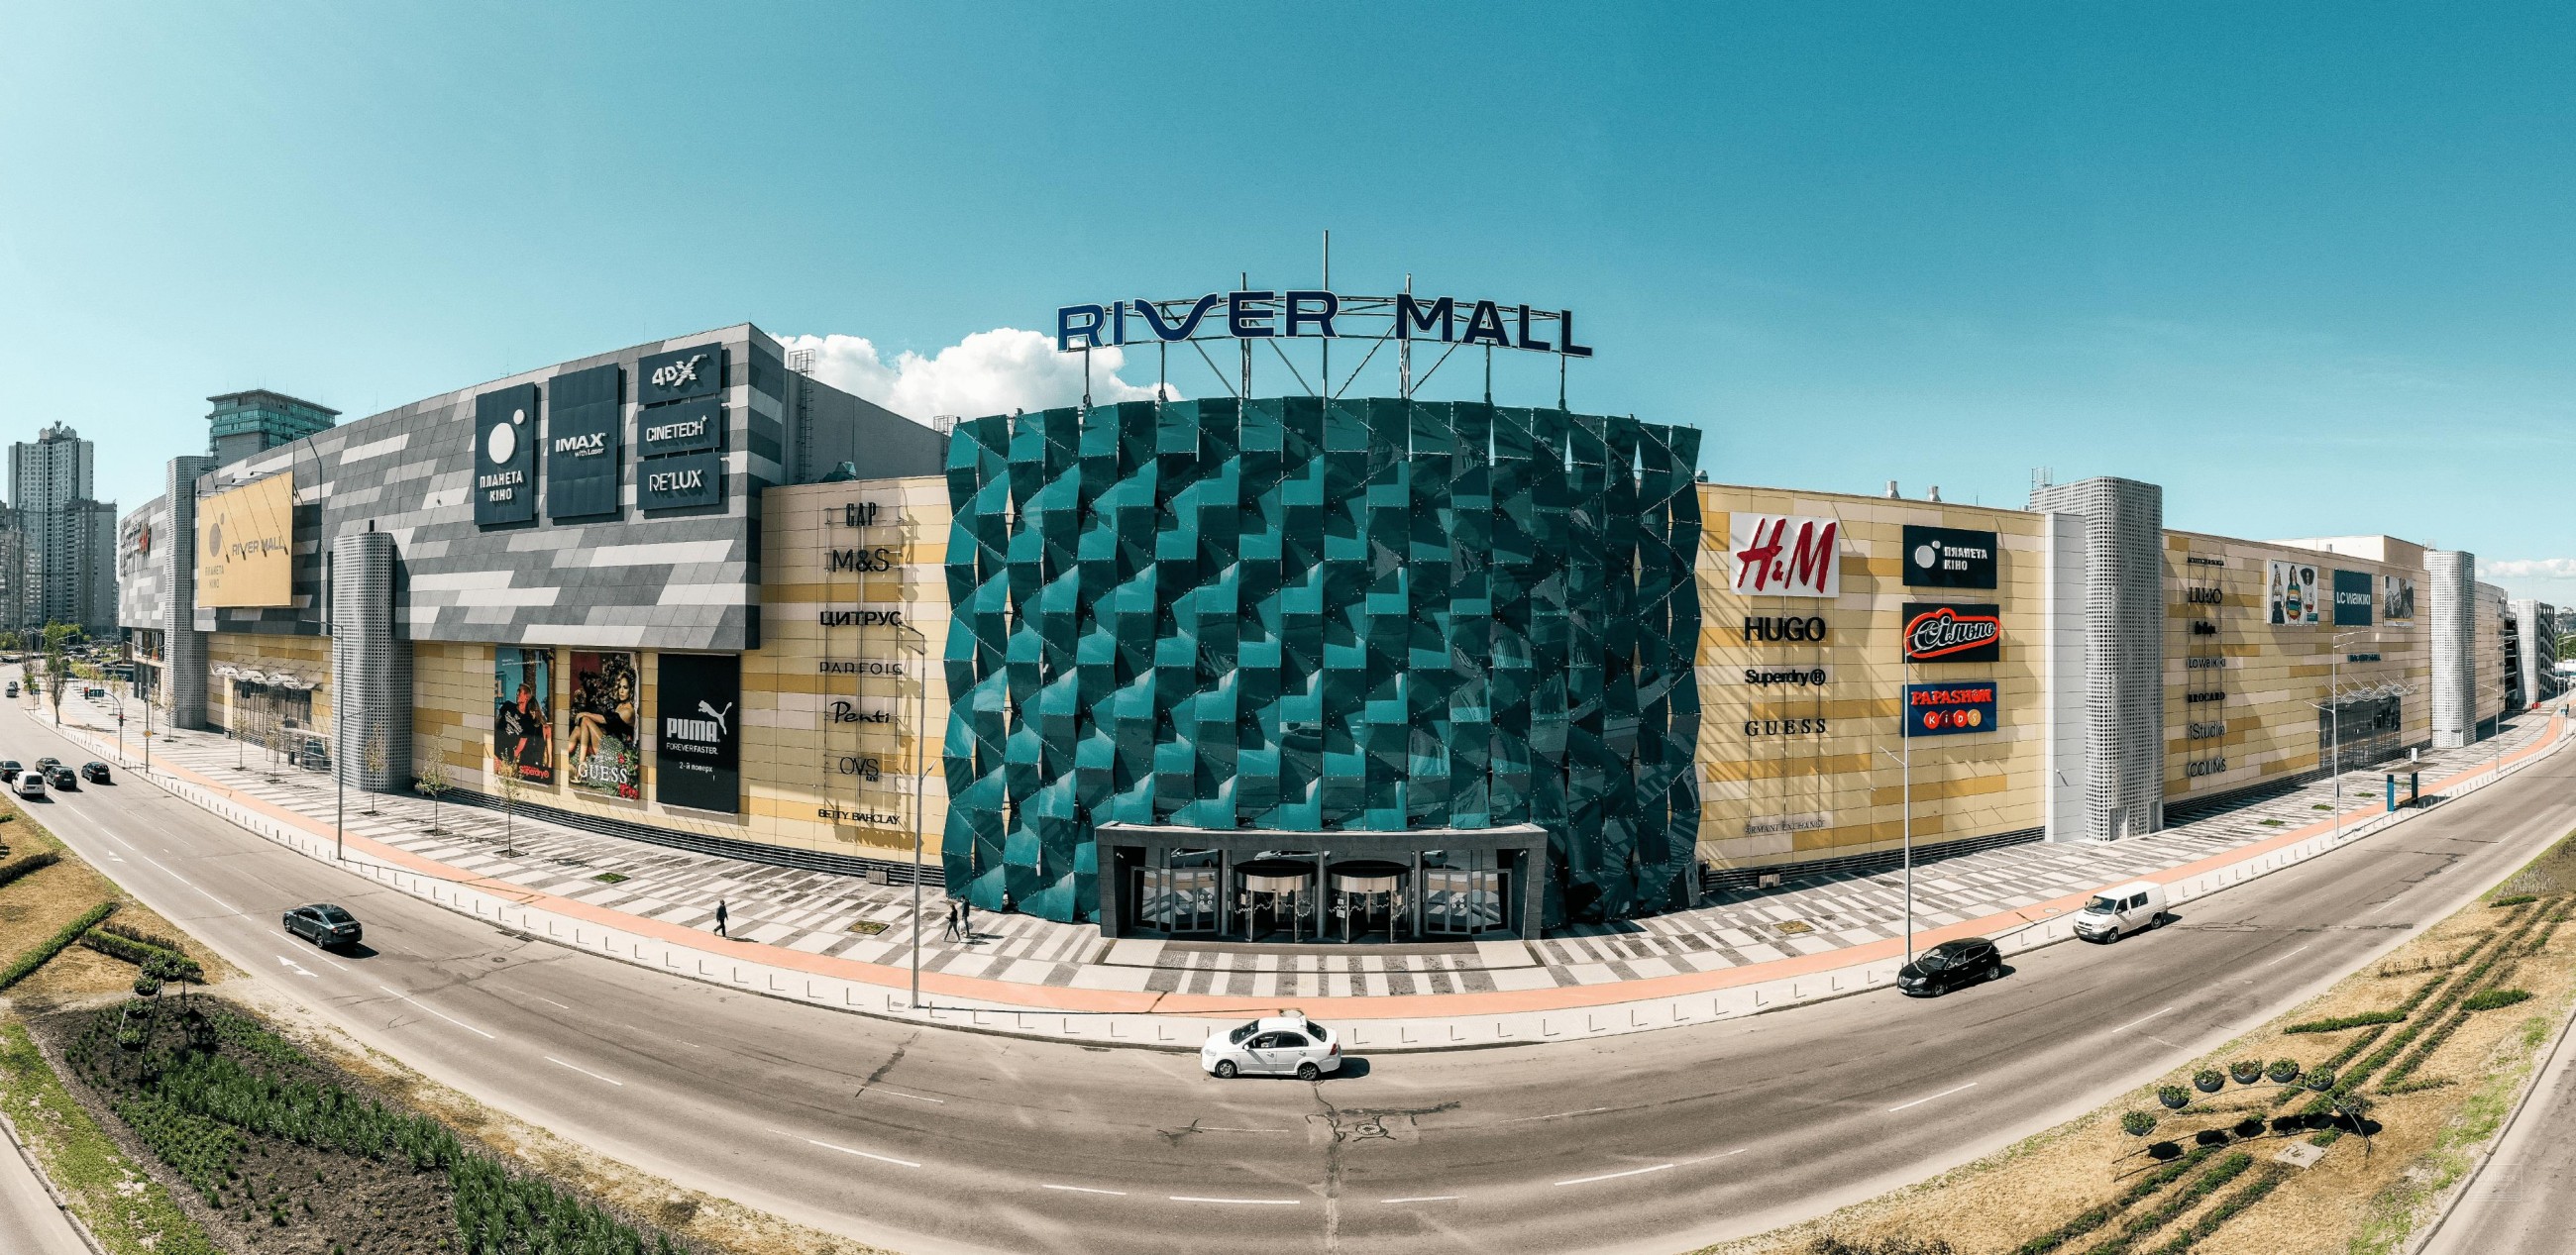 ТРЦ River Mall